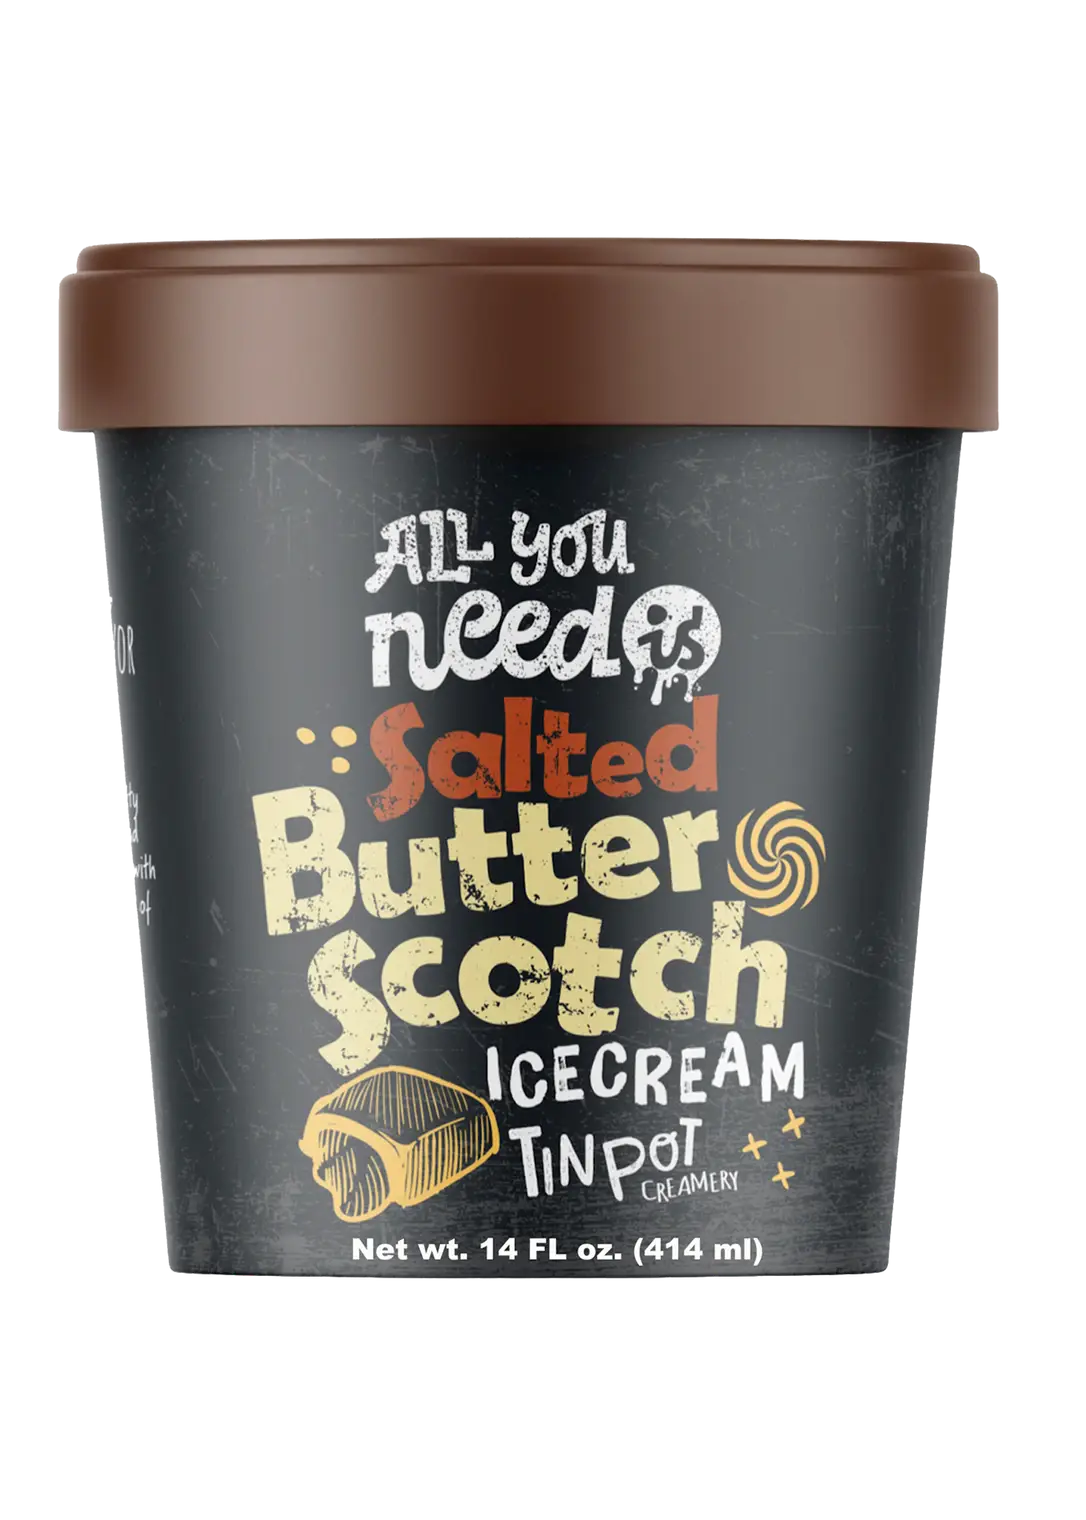 TIN POT CREAMERY Salted Butterscotch Ice Cream